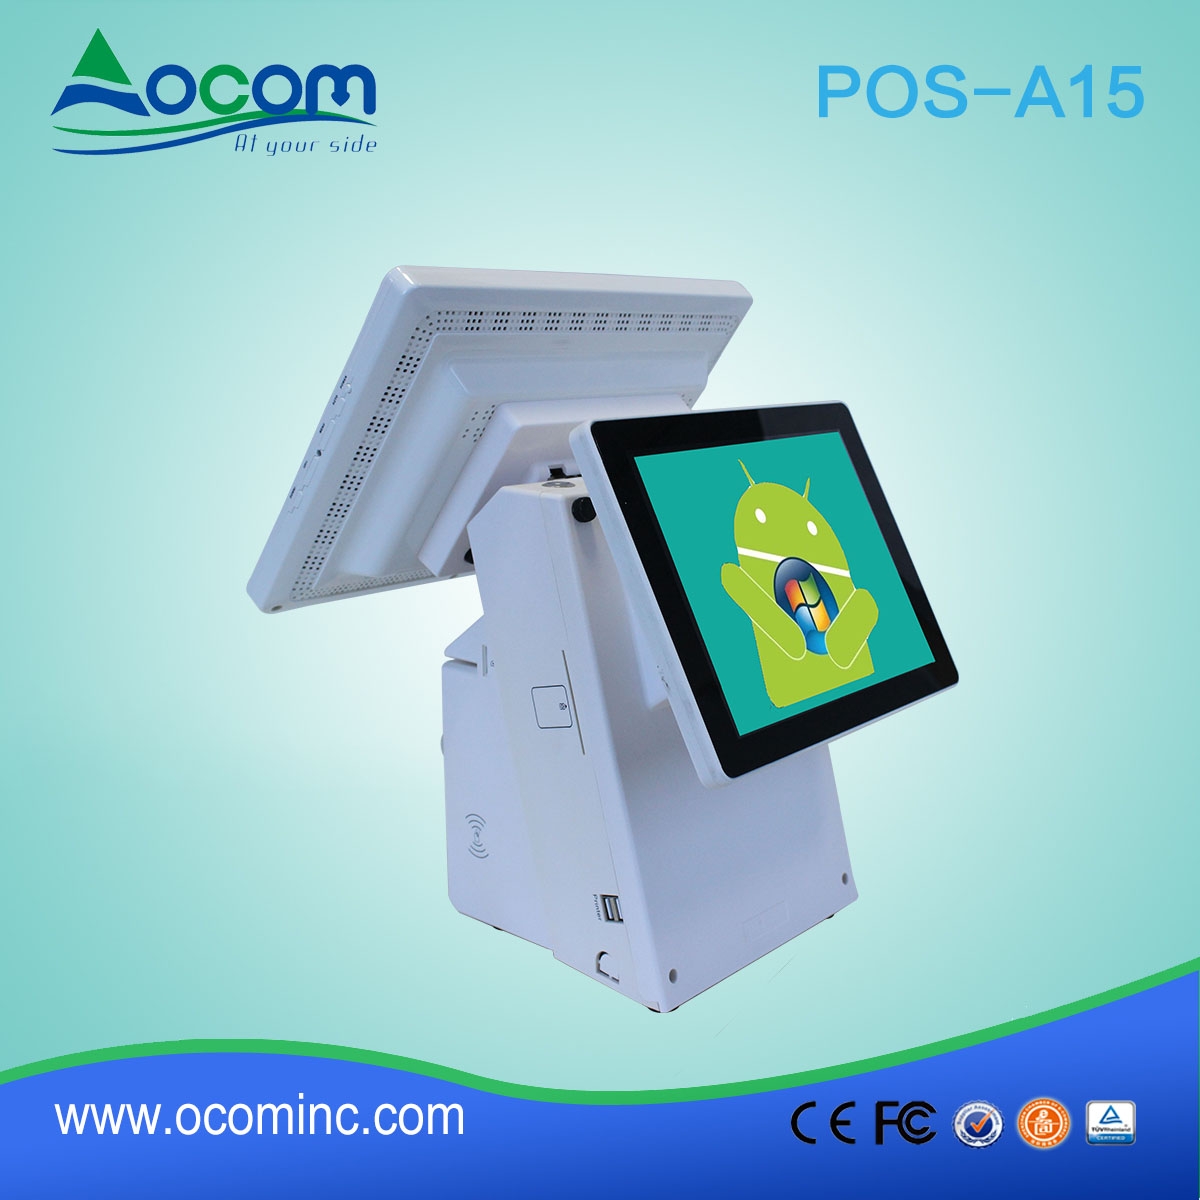 (POS-A15) Nieuw model met thermische printer ingebouwde Touch scherm POS Machine